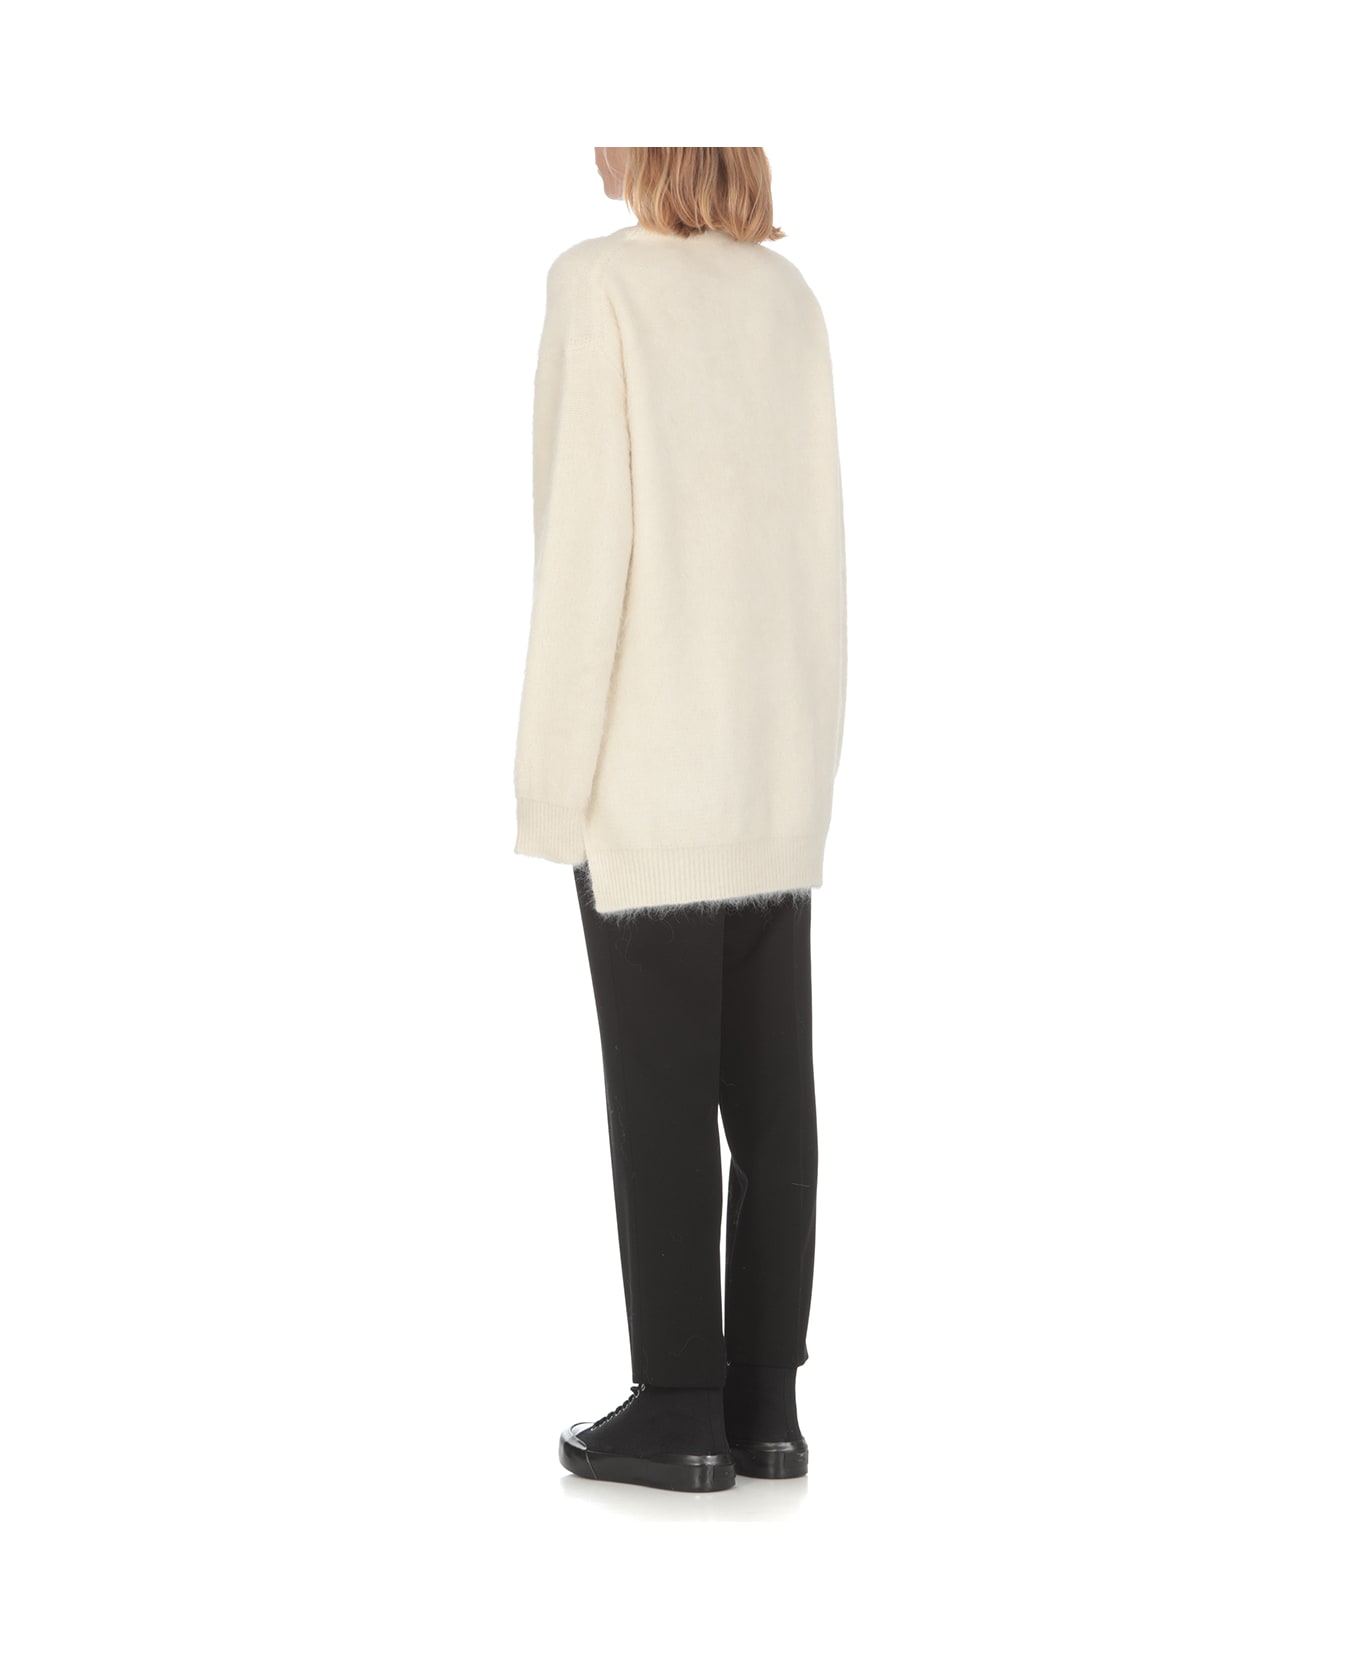 Jil Sander Ivory Alpaca Blend Sweater - White